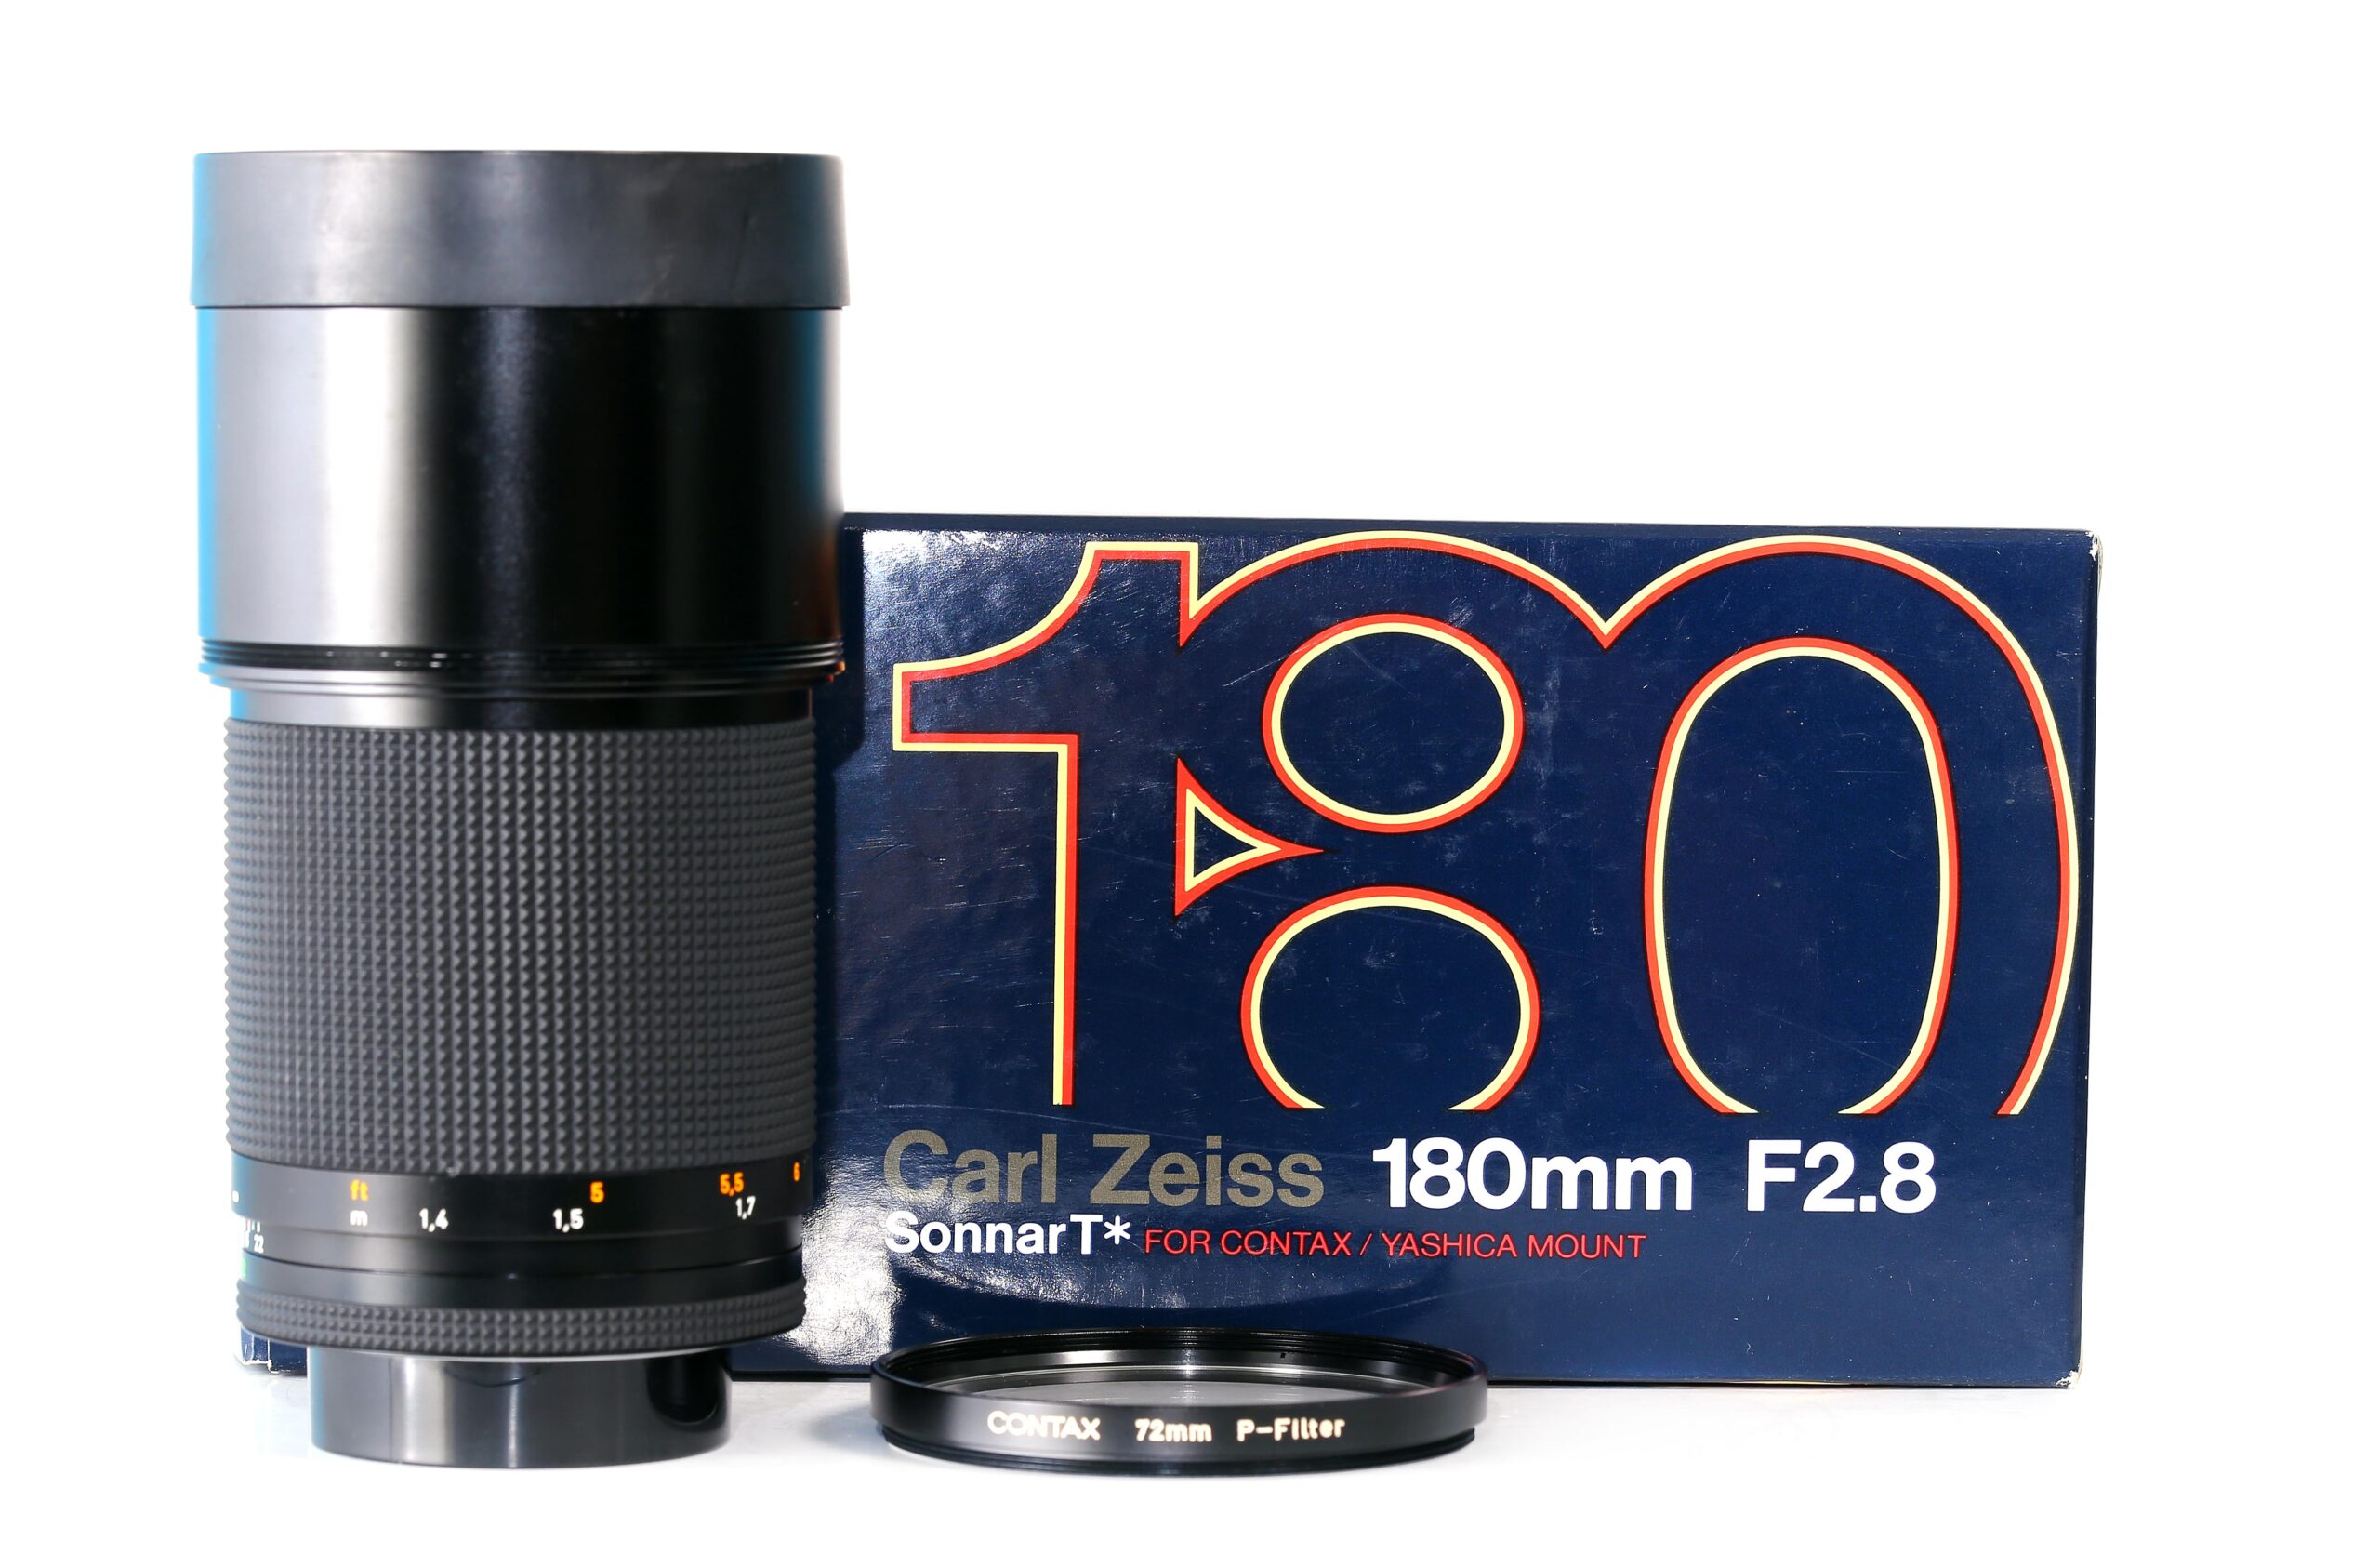 CONTAX Carl Zeiss Sonnar 180mm F2.8 T* MMJ